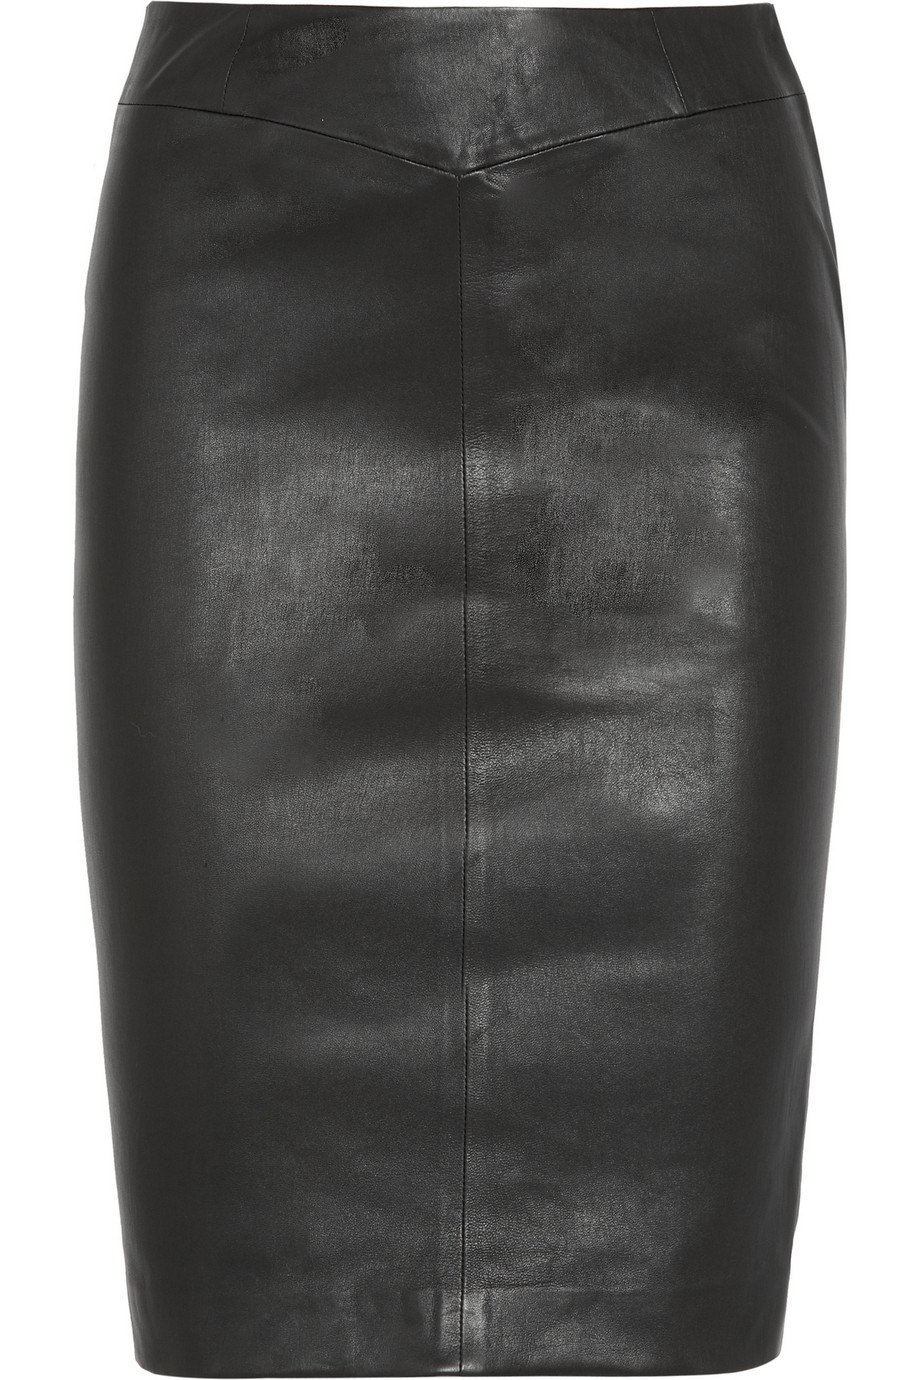 Lyst - Joseph Leather Pencil Skirt in Black